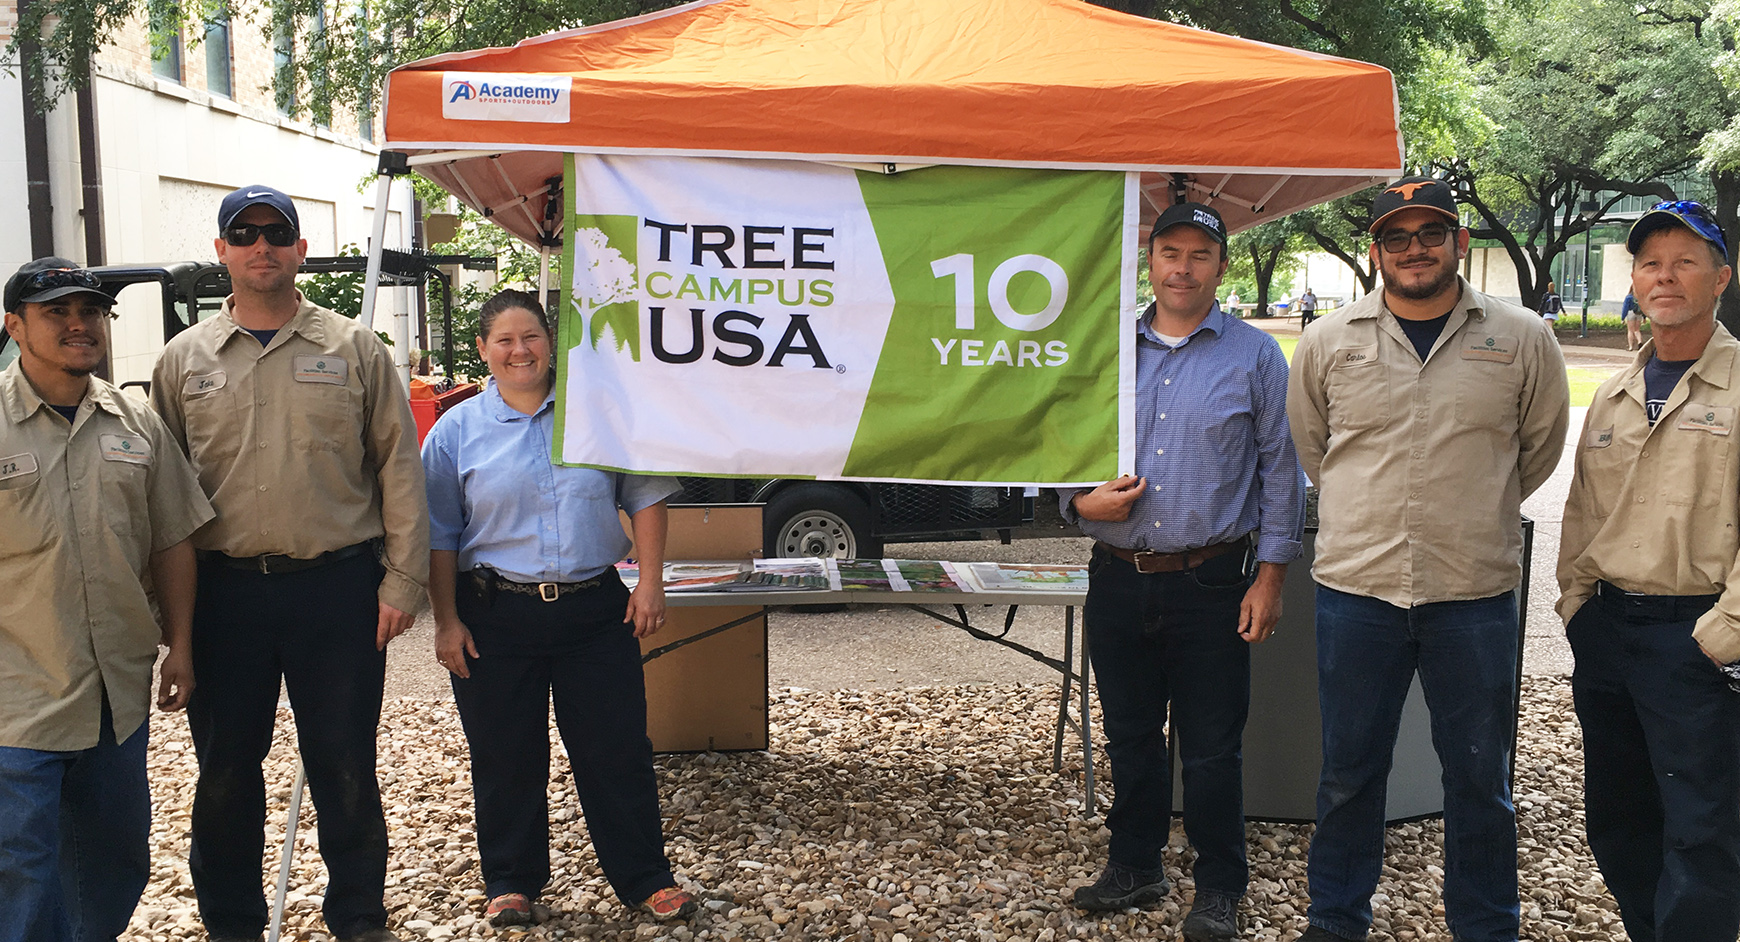 Arborists celebrating Tree Campus USA